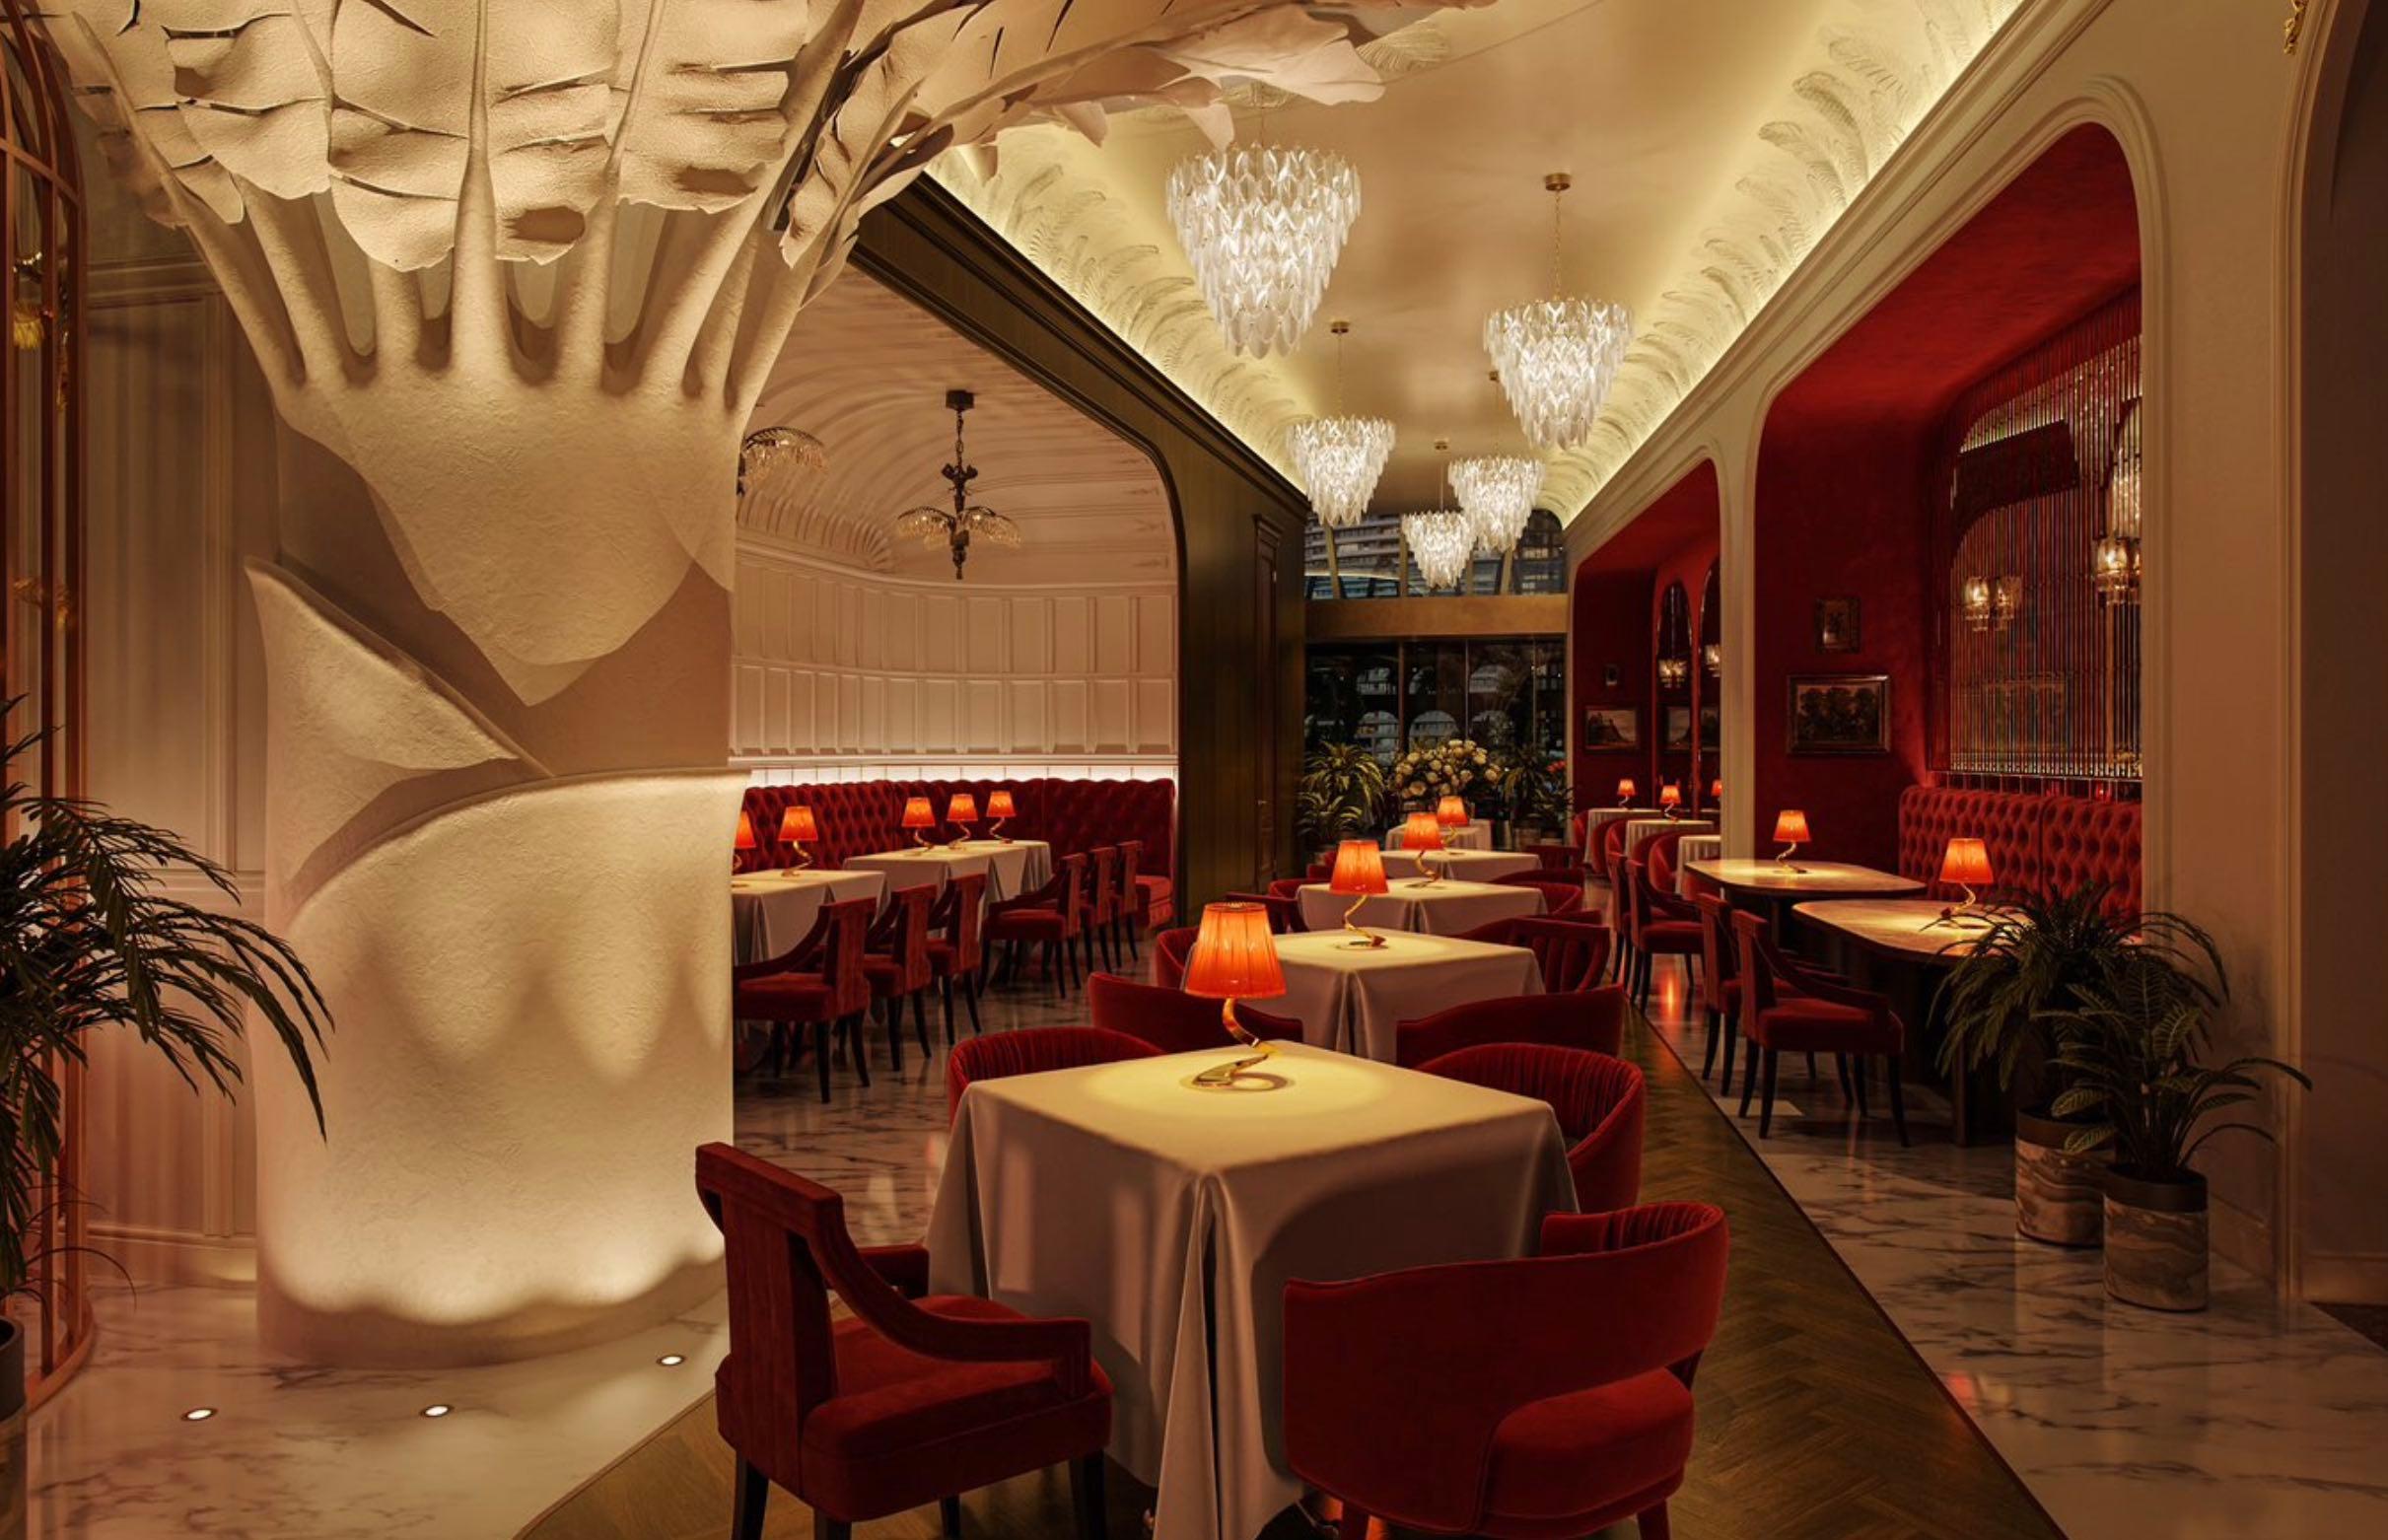 From London to Riyadh: Italian restaurant Bardo is going global